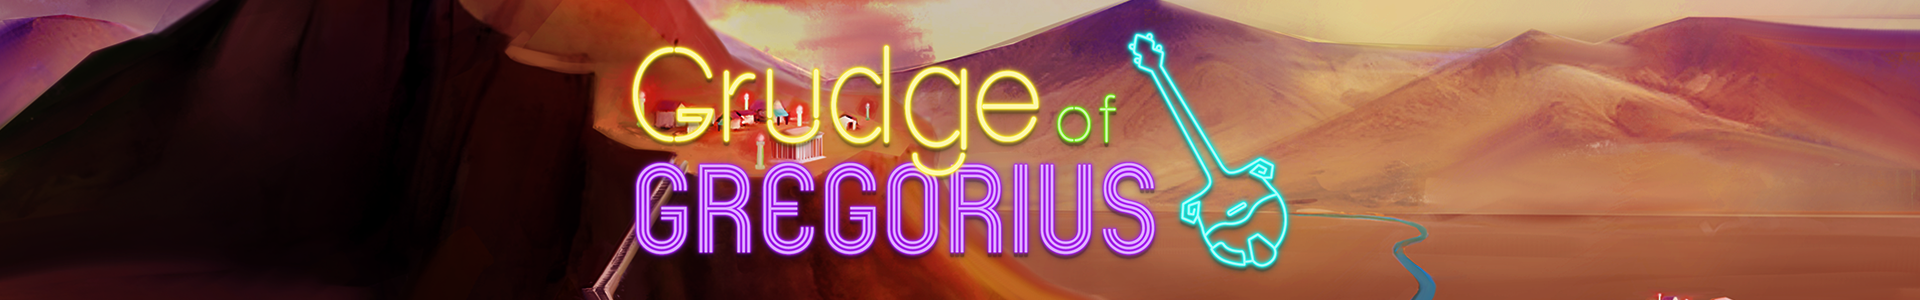 Grudge of Gregorius